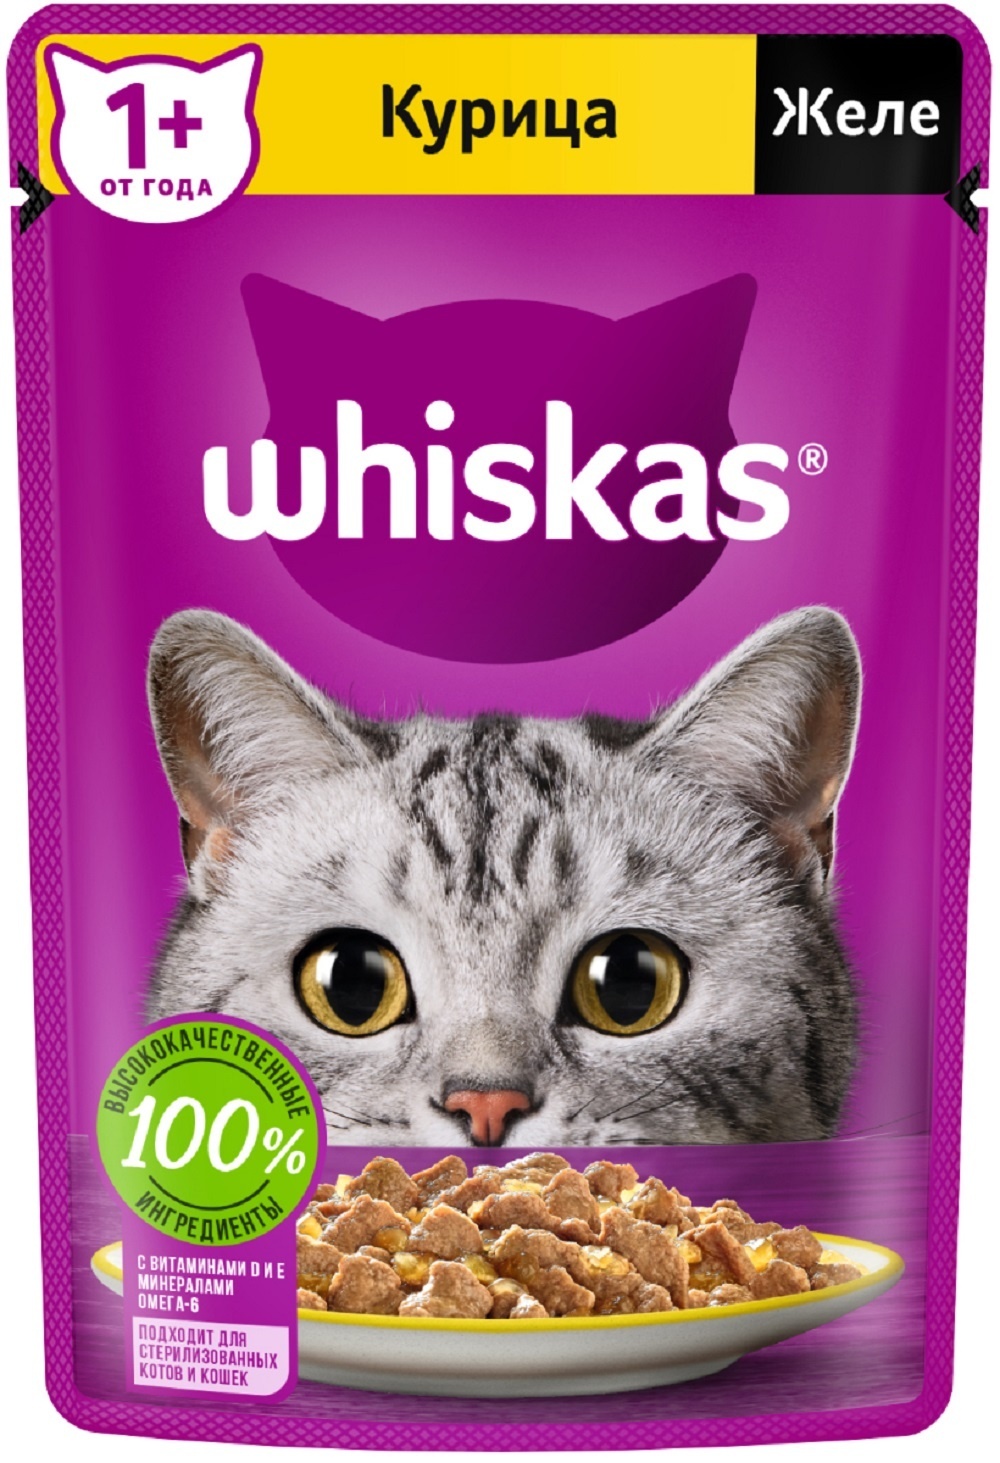 Whiskas влажный корм для кошек желе, с курицей (75 г)